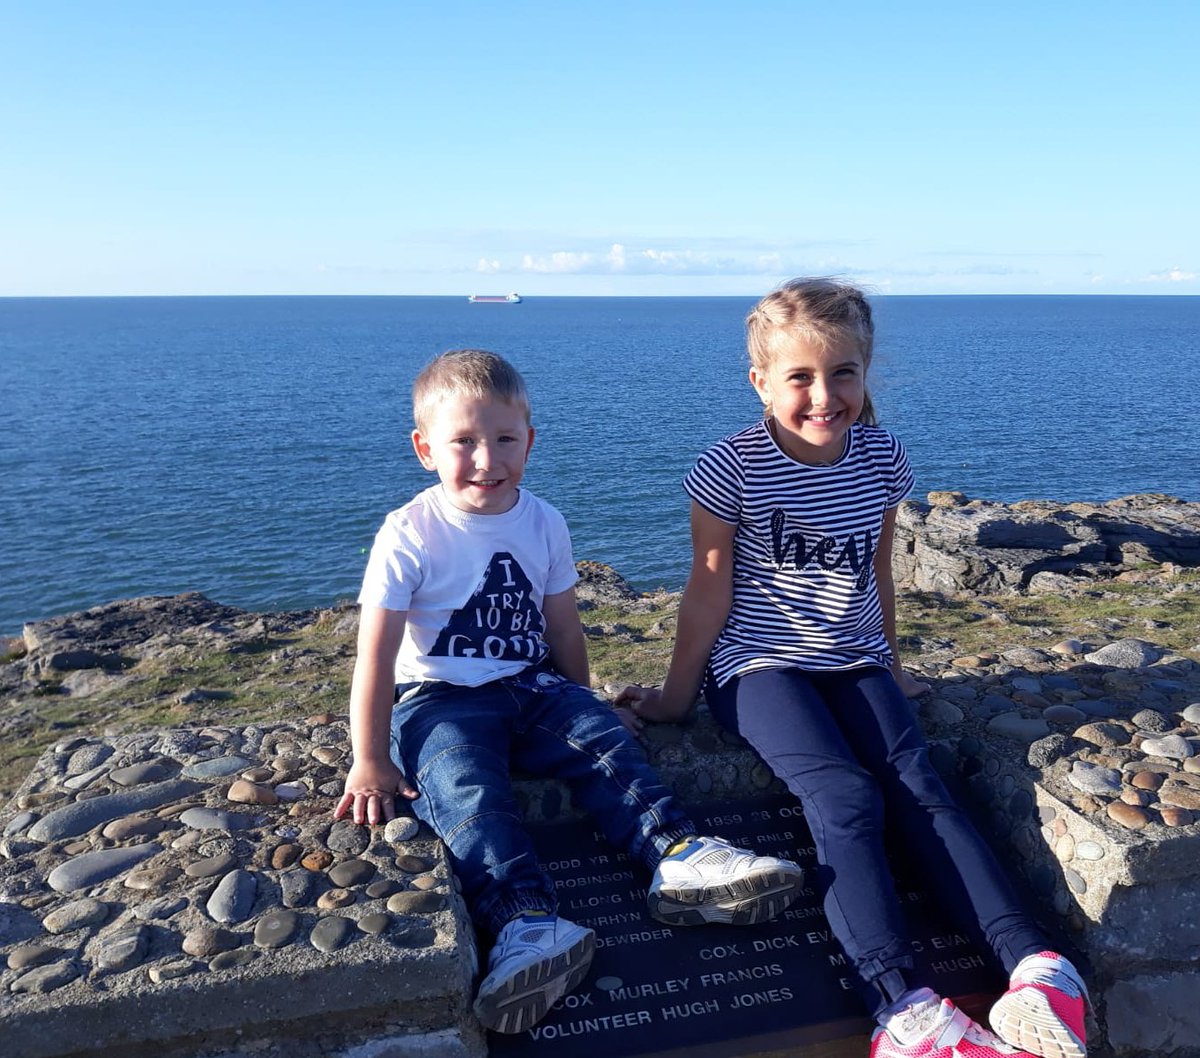 Lovely few days having the family over #nephew #daughter #miniwarriors #outandabout #livingbythesea #moelfre #moelfrebeach #Anglesey @gazhwhite1983